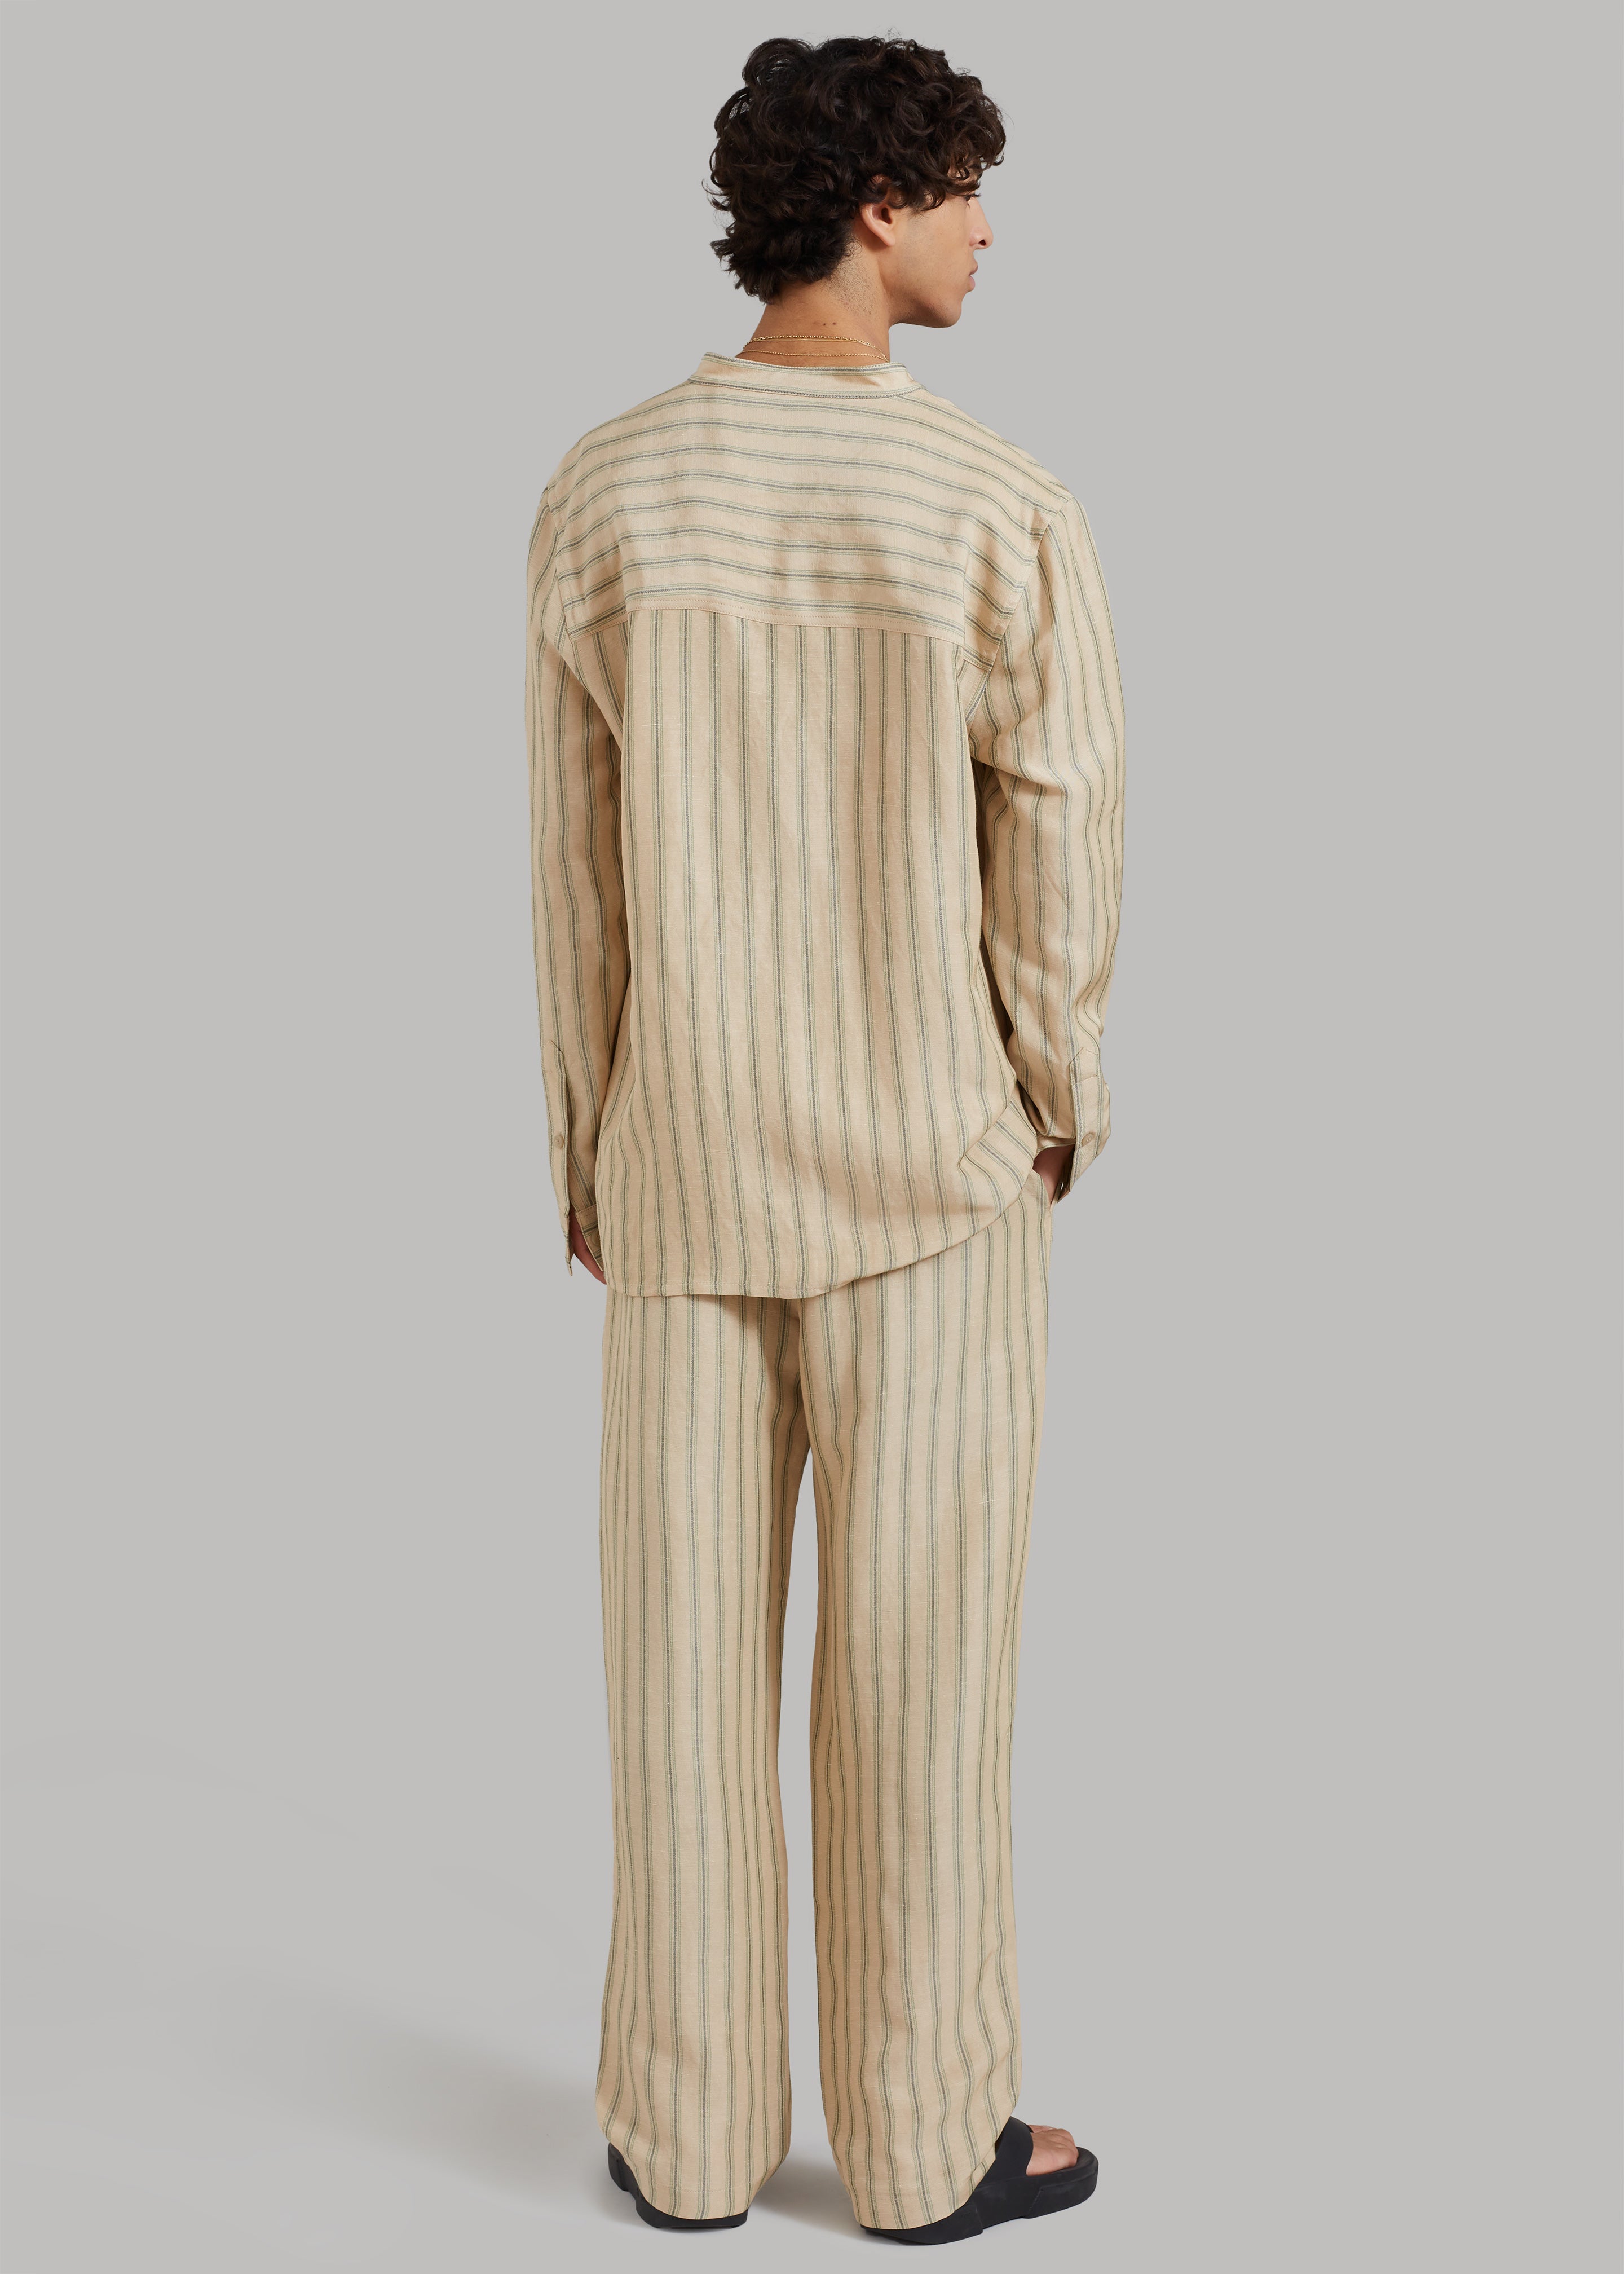 Róhe Resort Striped Trousers - Deckchair Stripe - 6